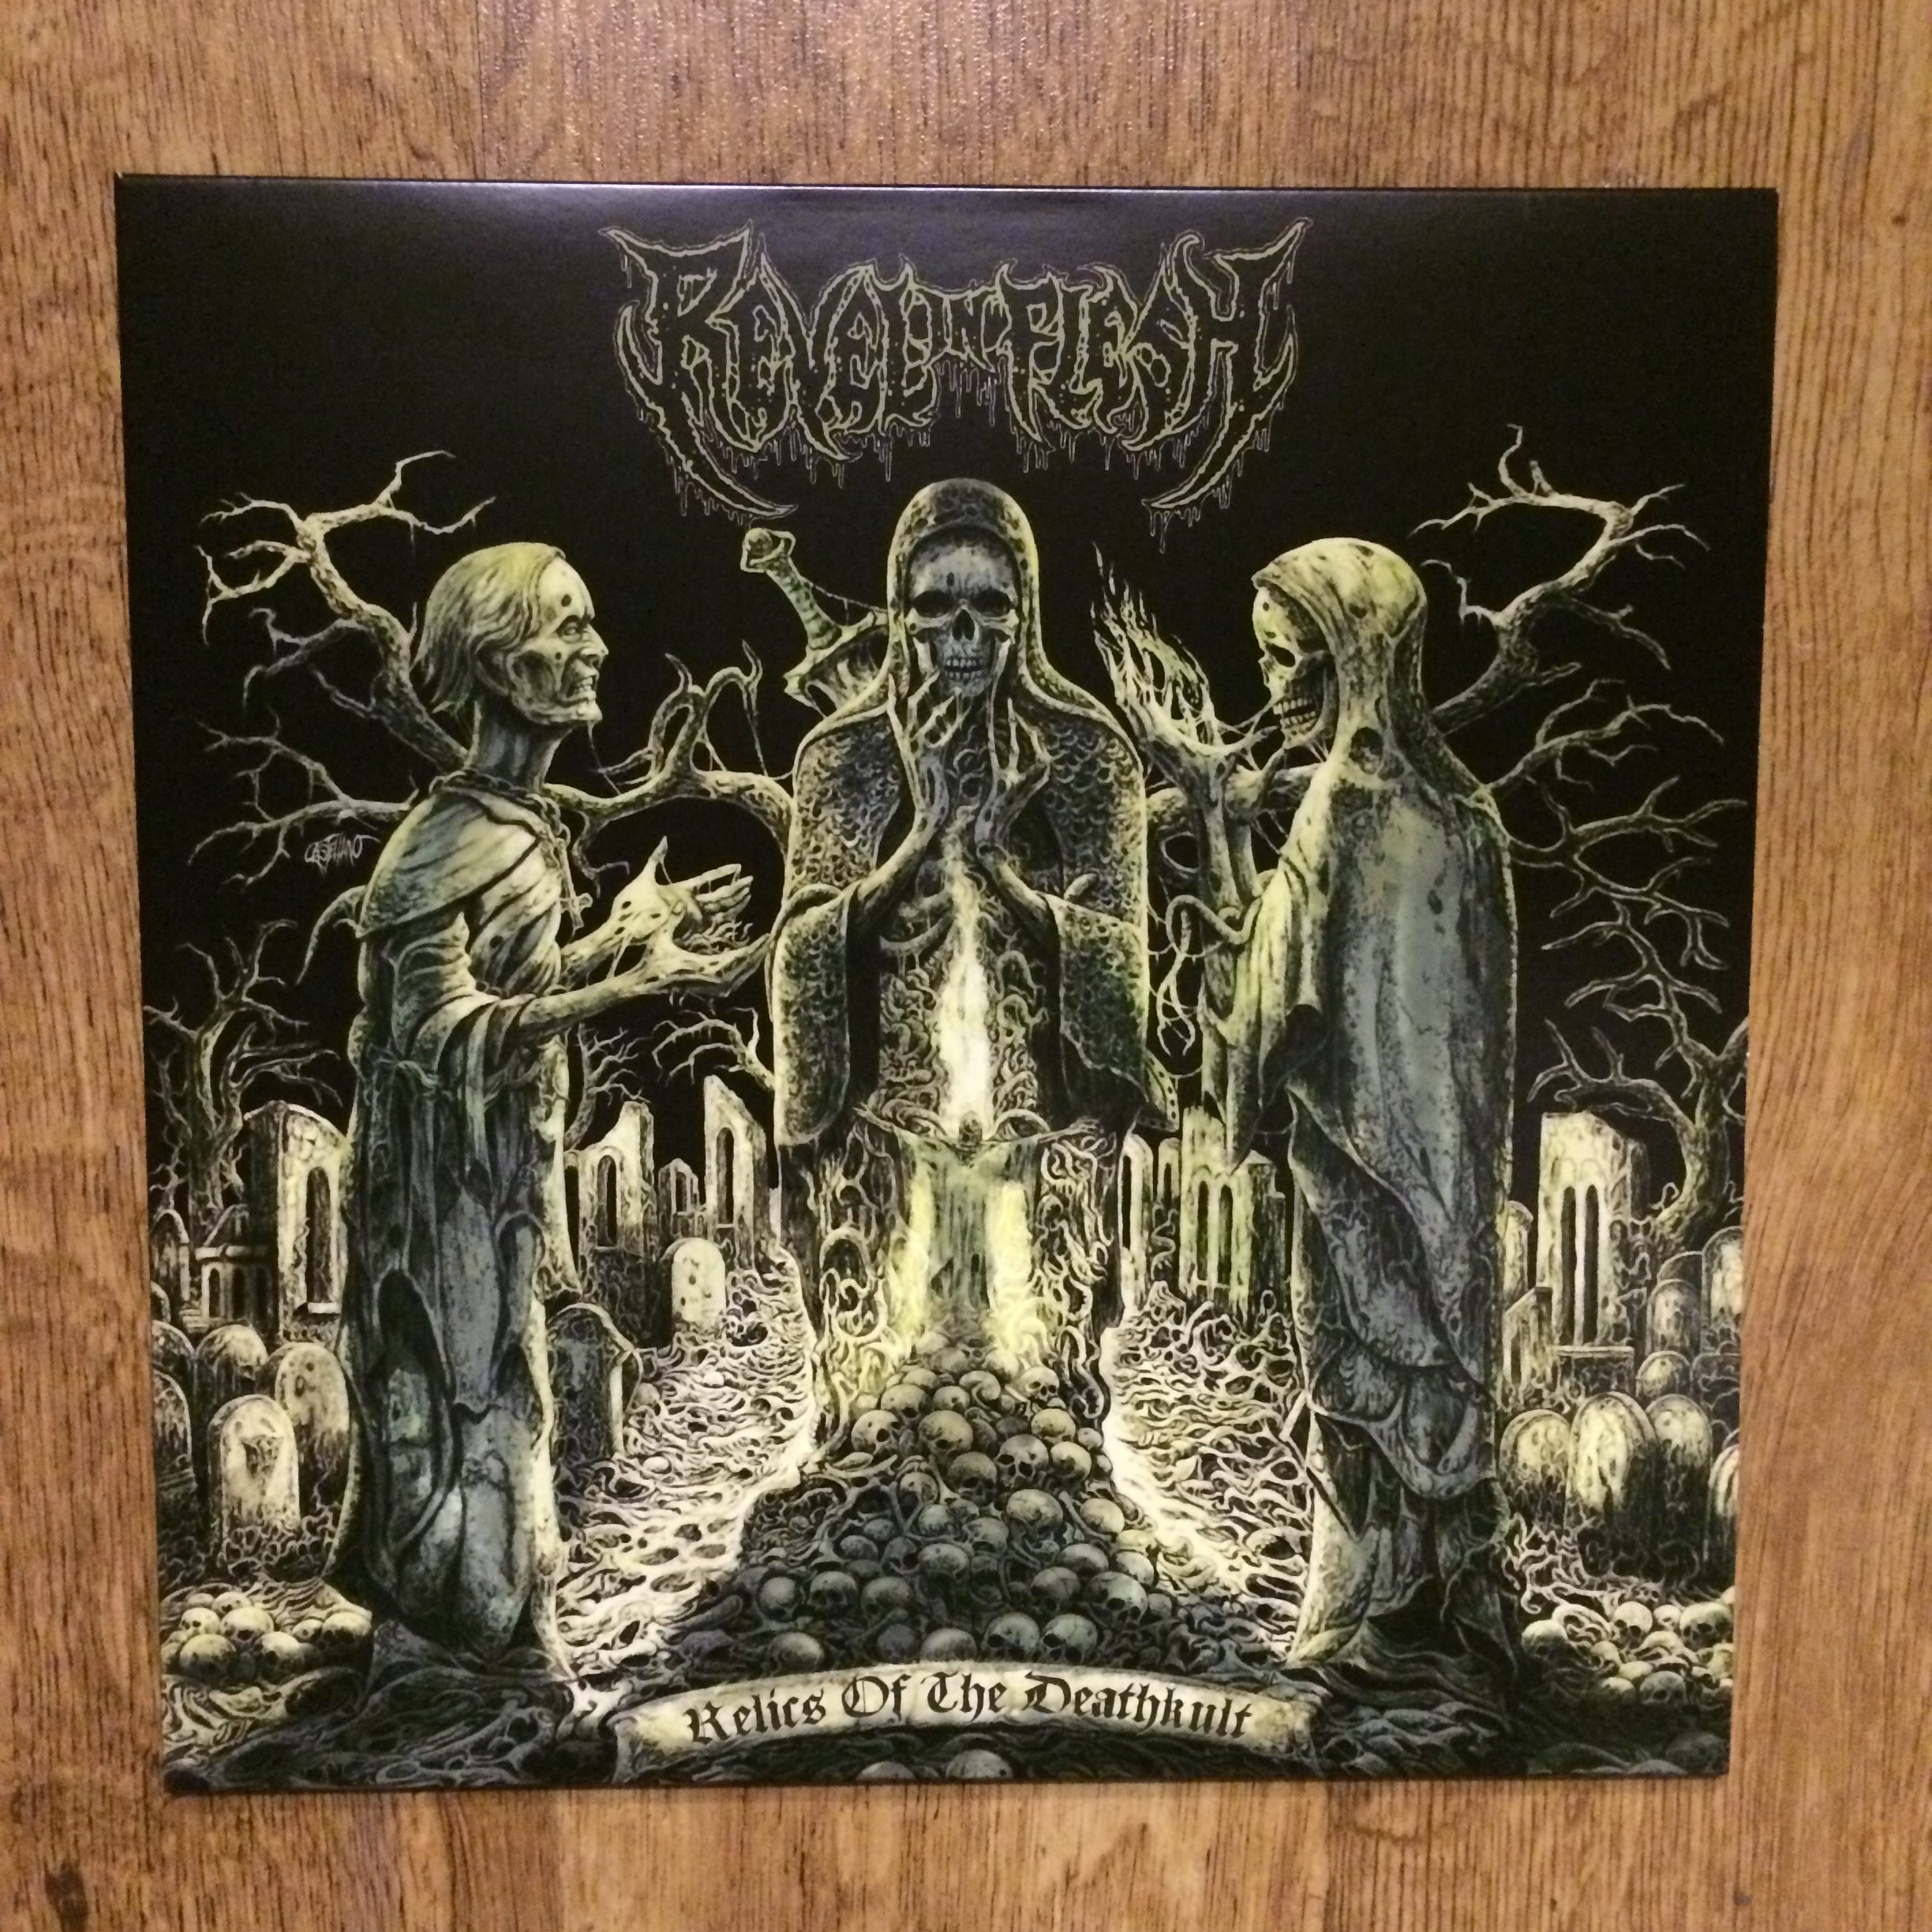 Photo of the Revel in Flesh - "Relics of the Deathkult" LP